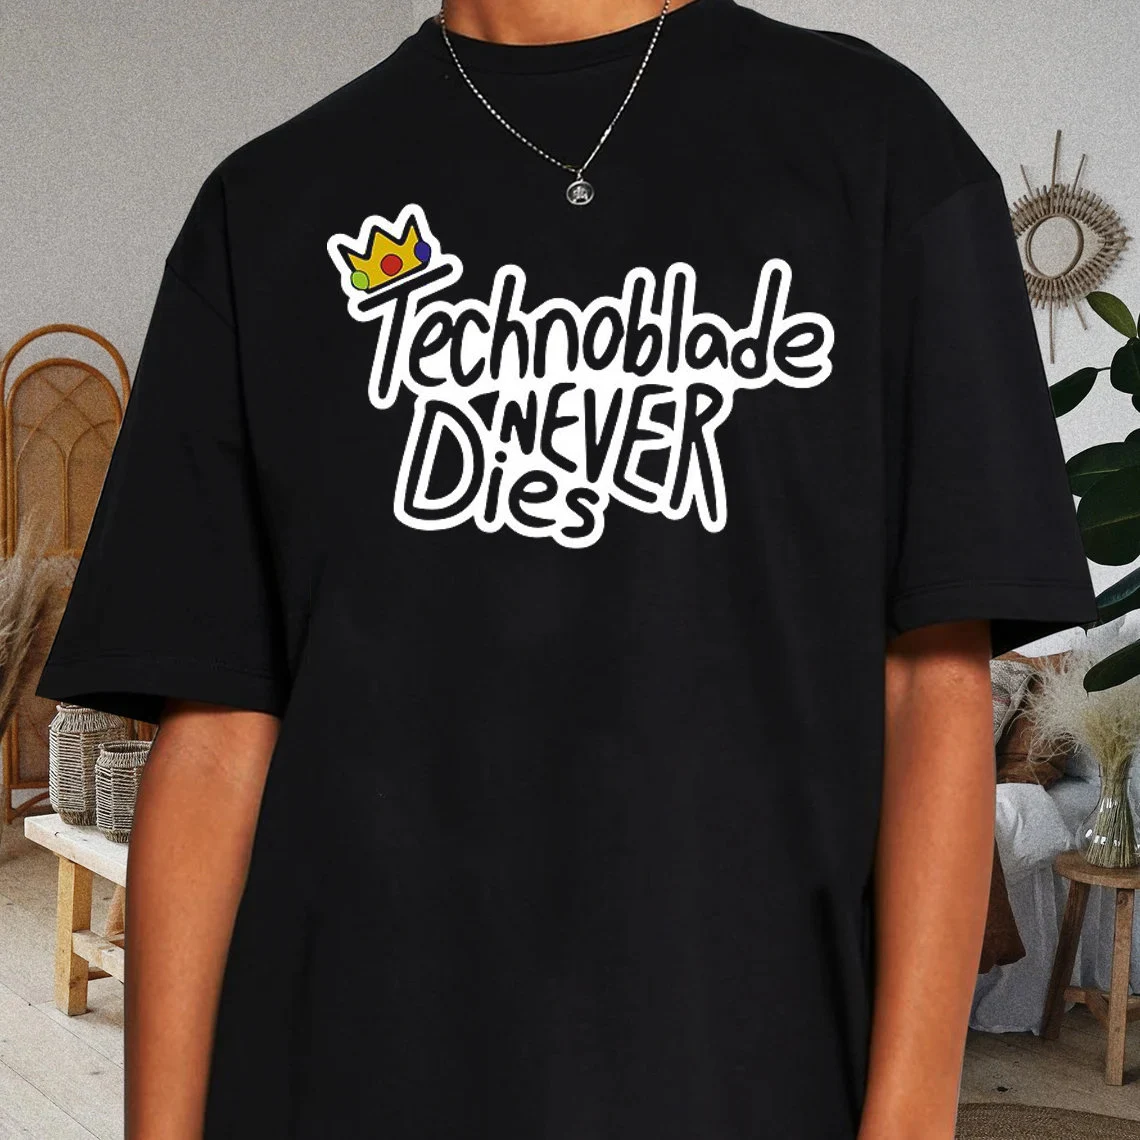 Techno Blade Merch Technoblade Death - T-shirt